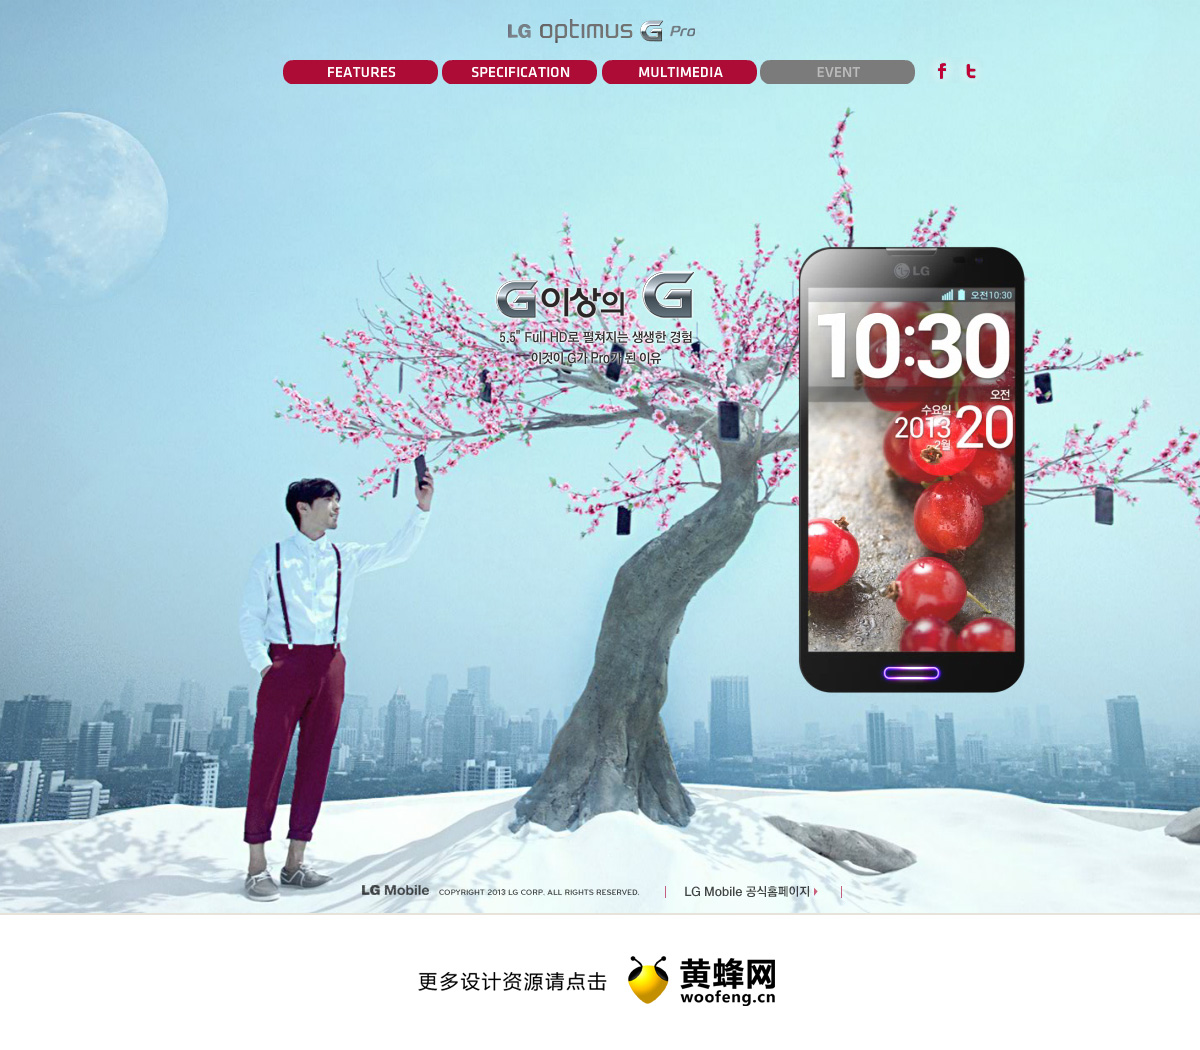 LG OPTIMUS G Pro手机产品网站，来源自黄蜂网https://woofeng.cn/web